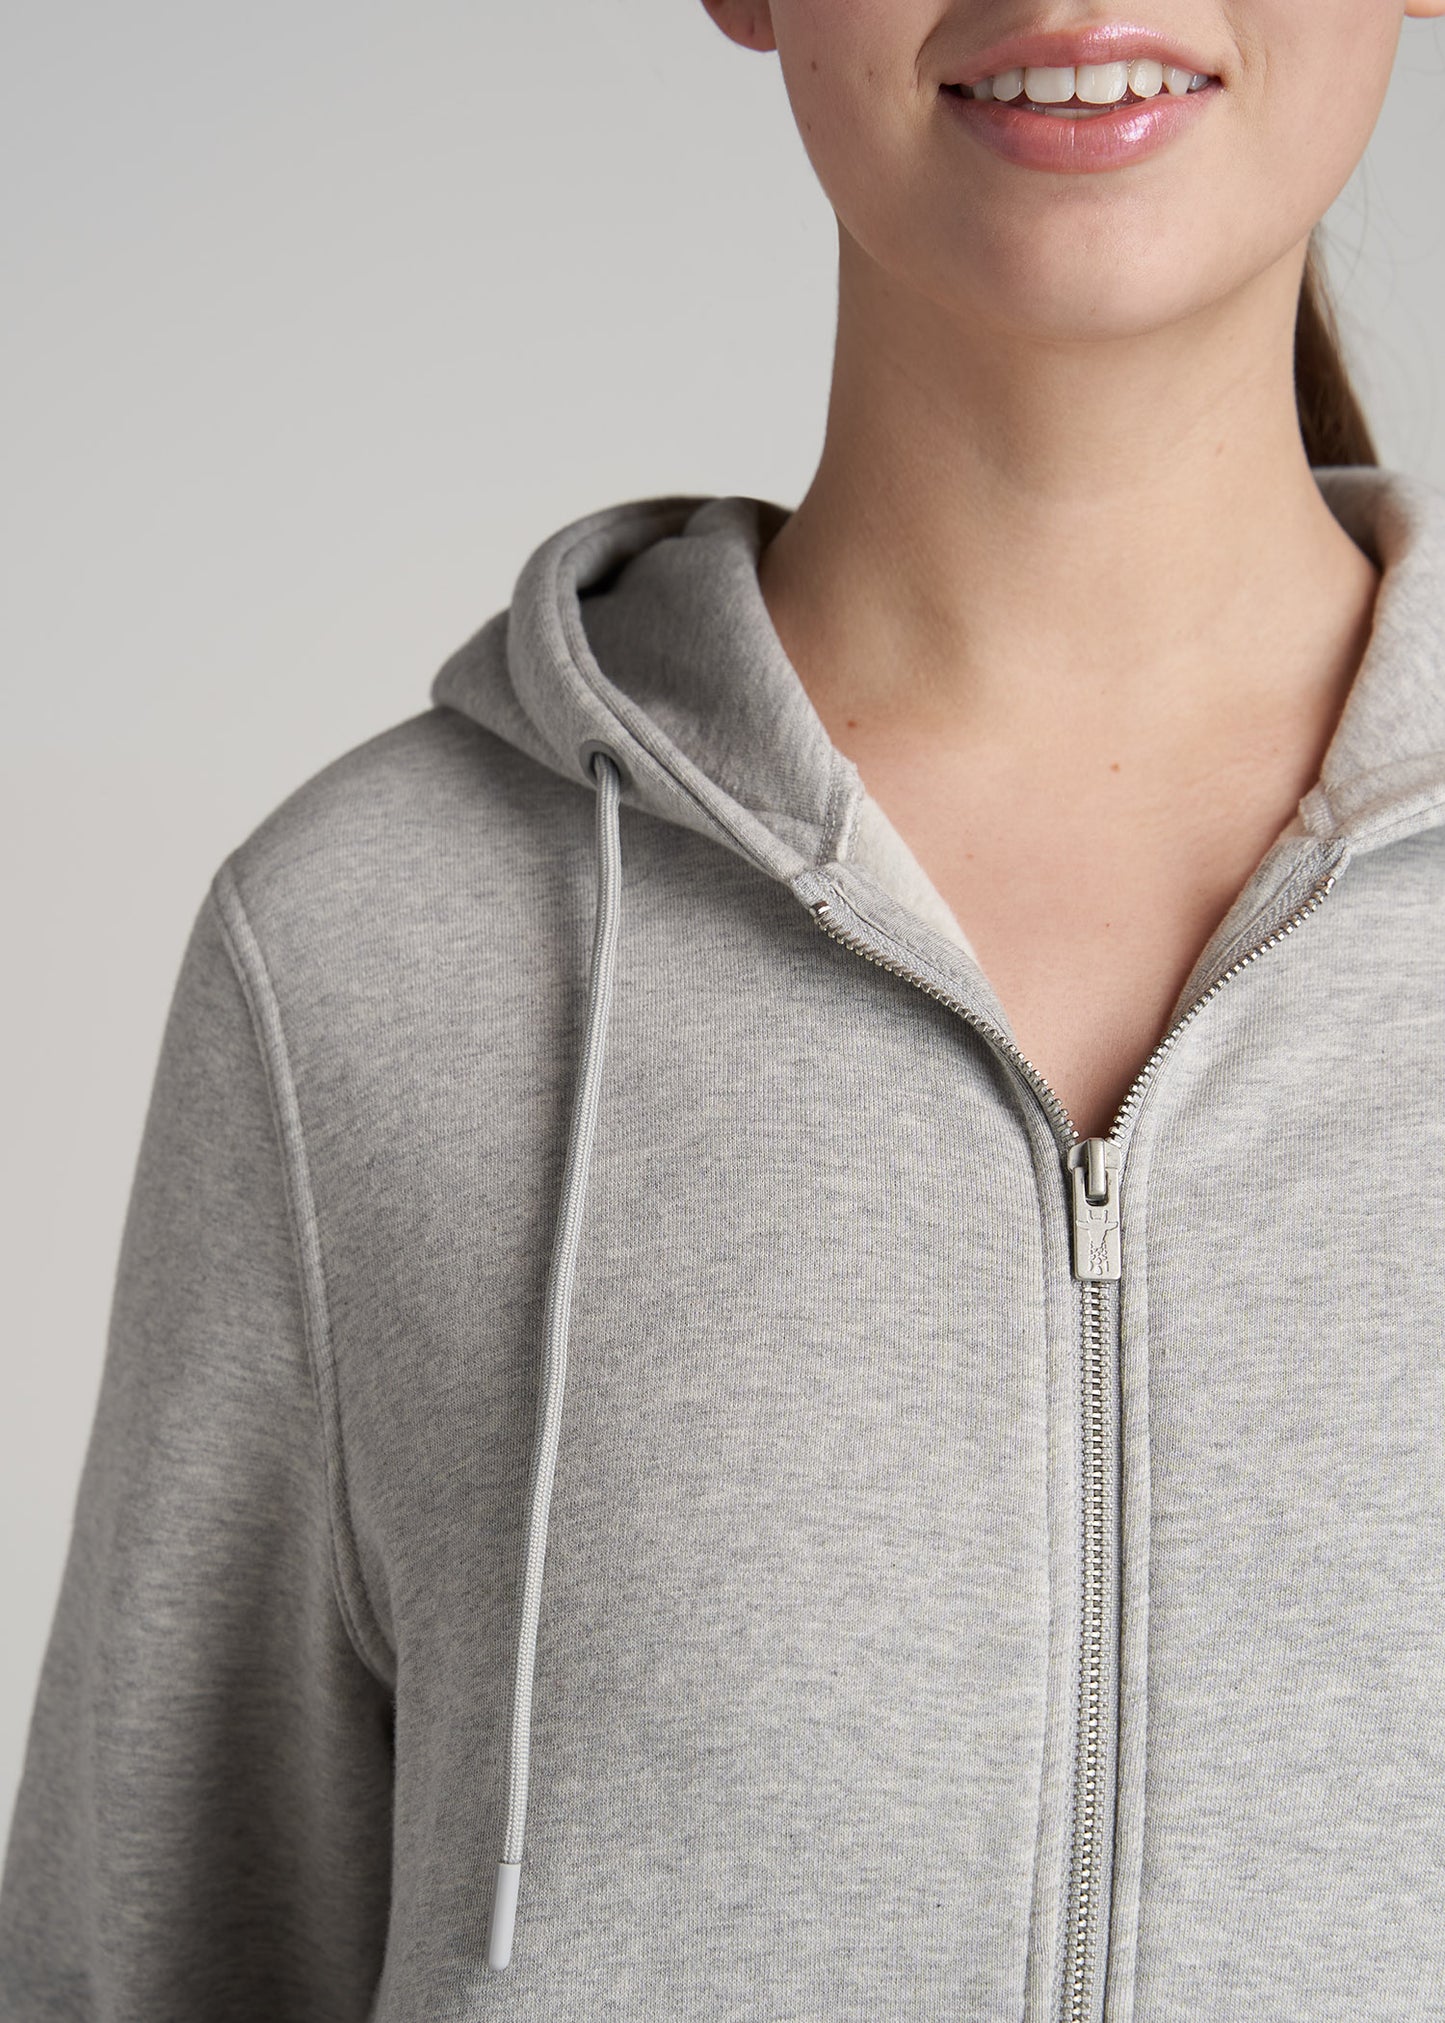 Women's Sweatshirts: Oversized, Zip Up and Fleece